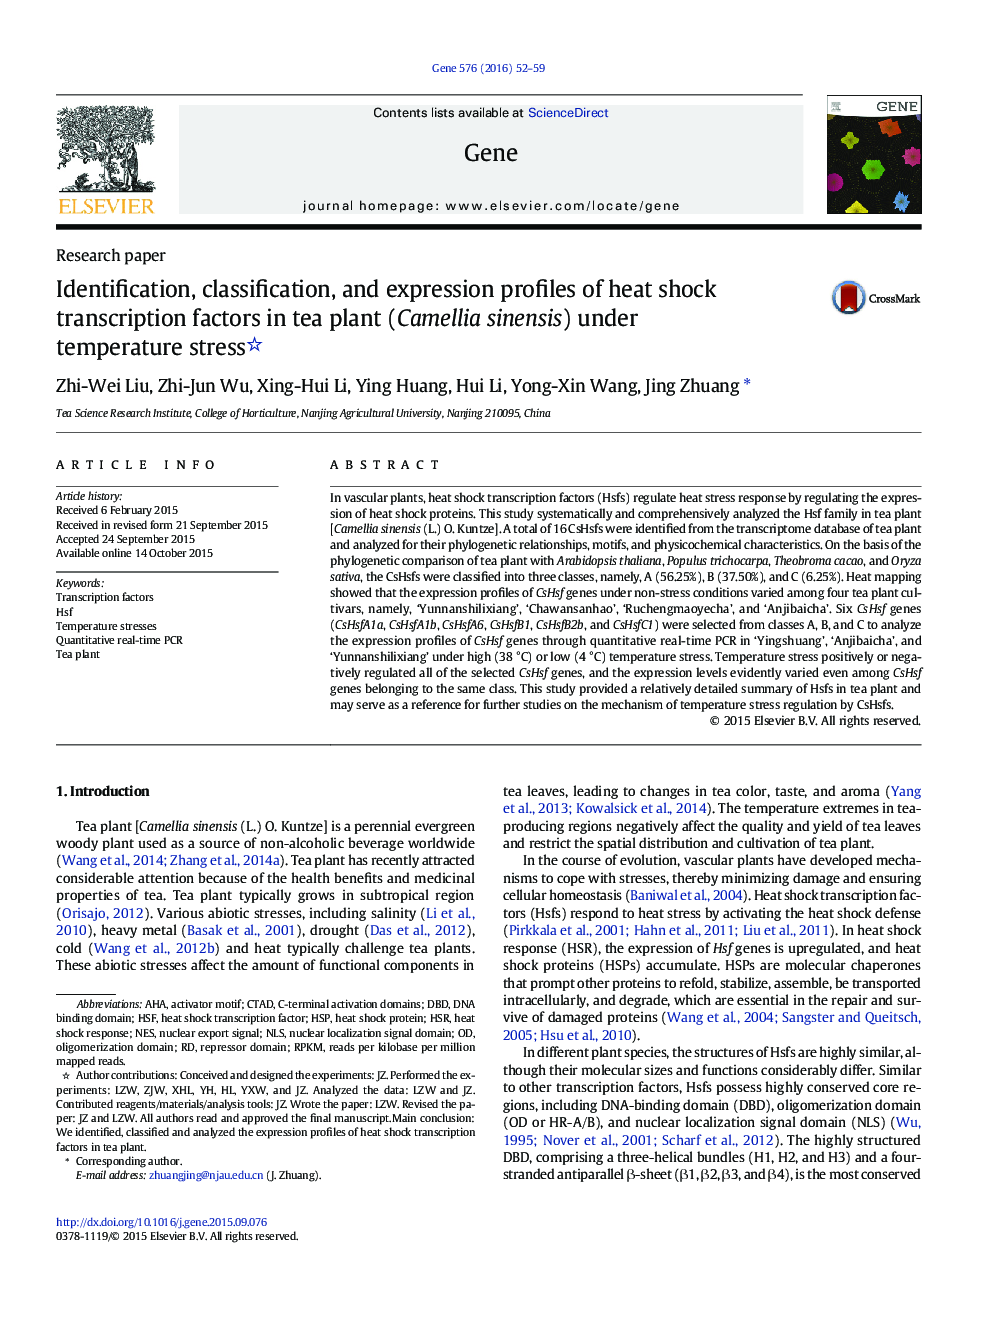 Identification, classification, and expression profiles of heat shock transcription factors in tea plant (Camellia sinensis) under temperature stress 